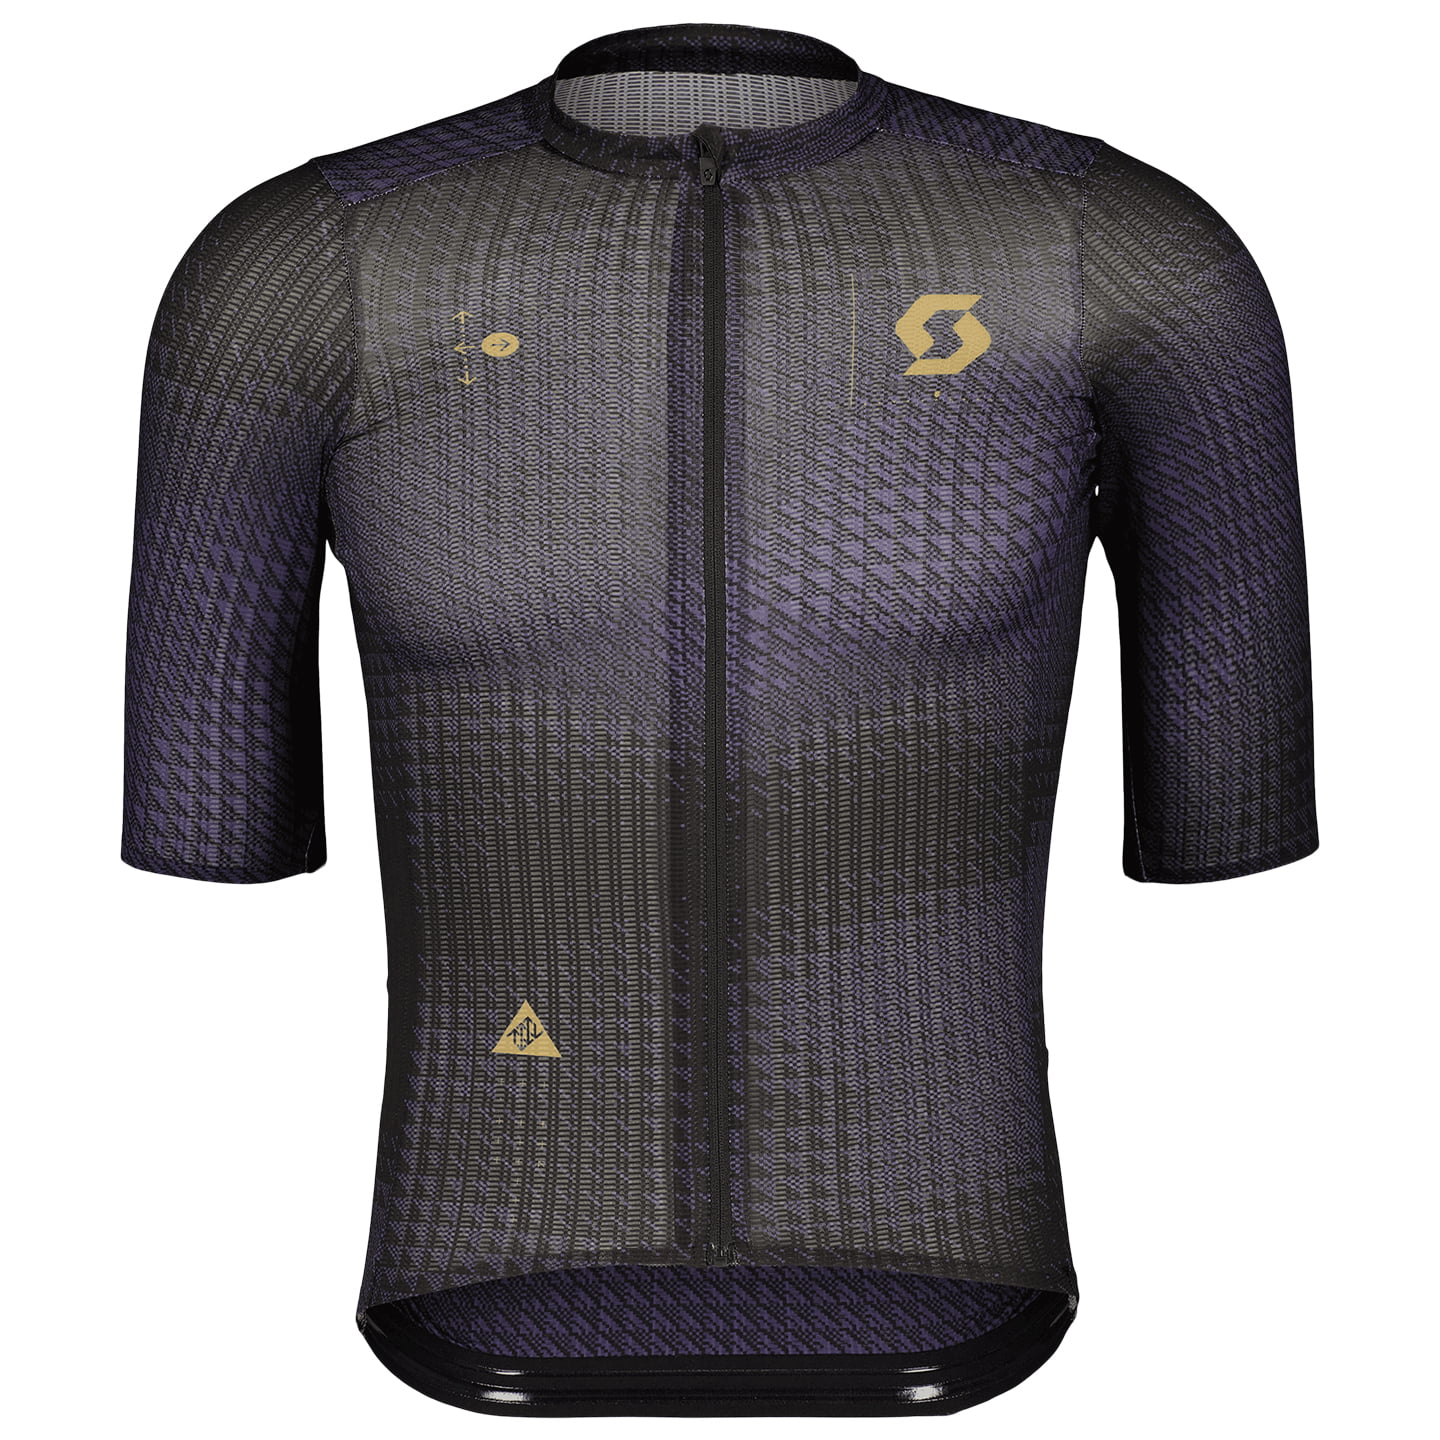 SCOTT ULTD. Training Short Sleeve Jersey, for men, size S, Cycling jersey, Cycling clothing